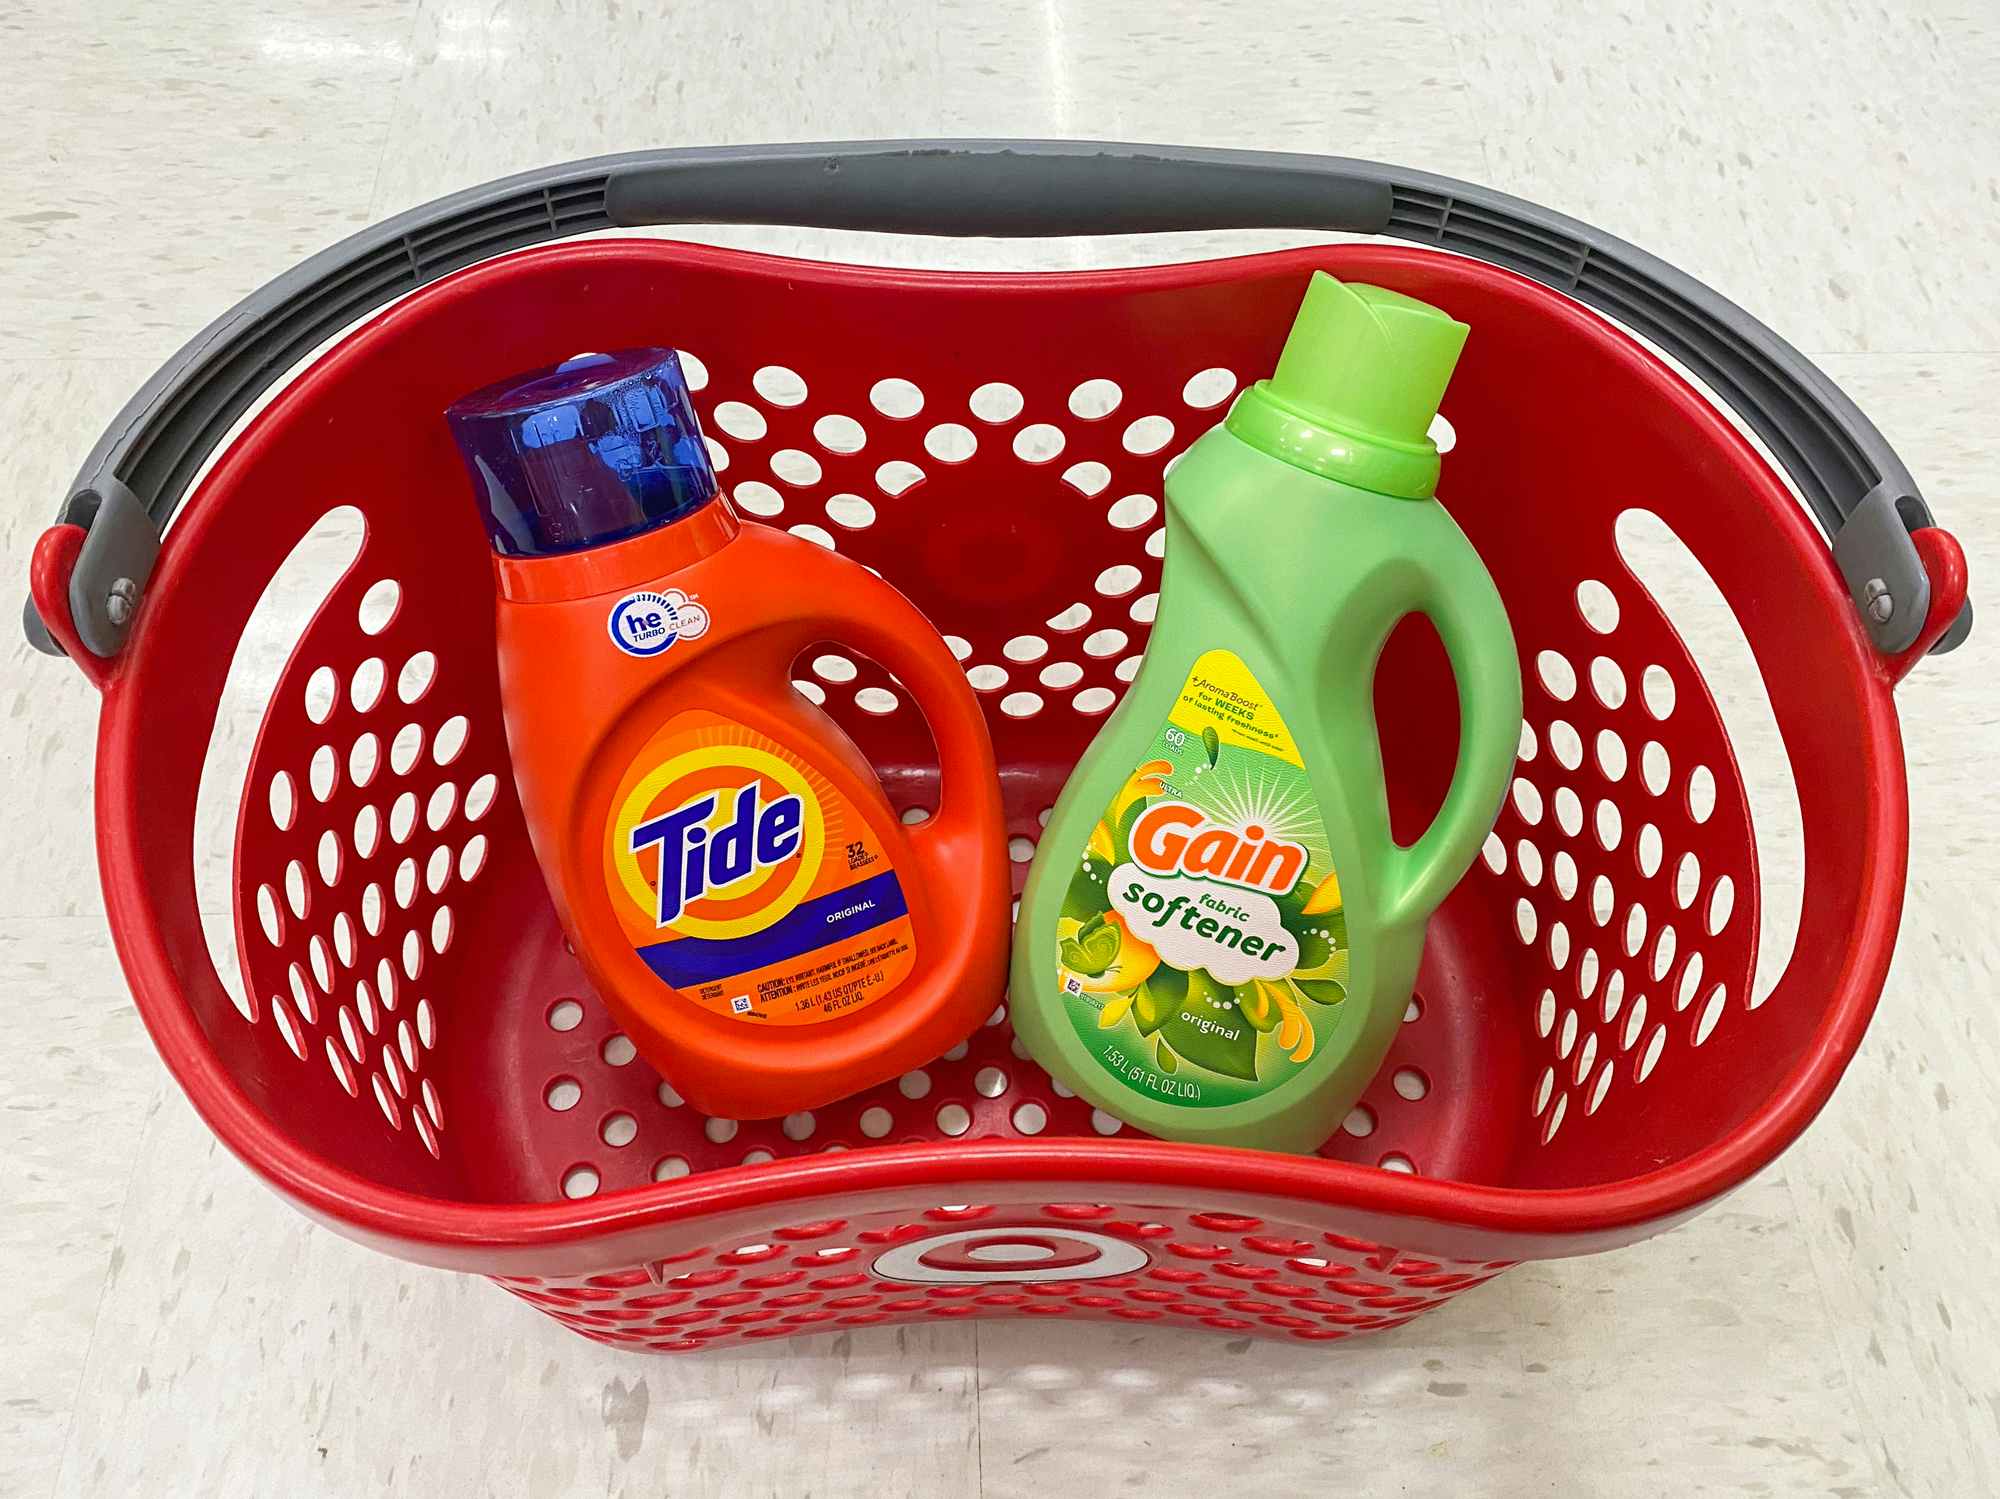 tide and gain laundry detergent bottles in target basket